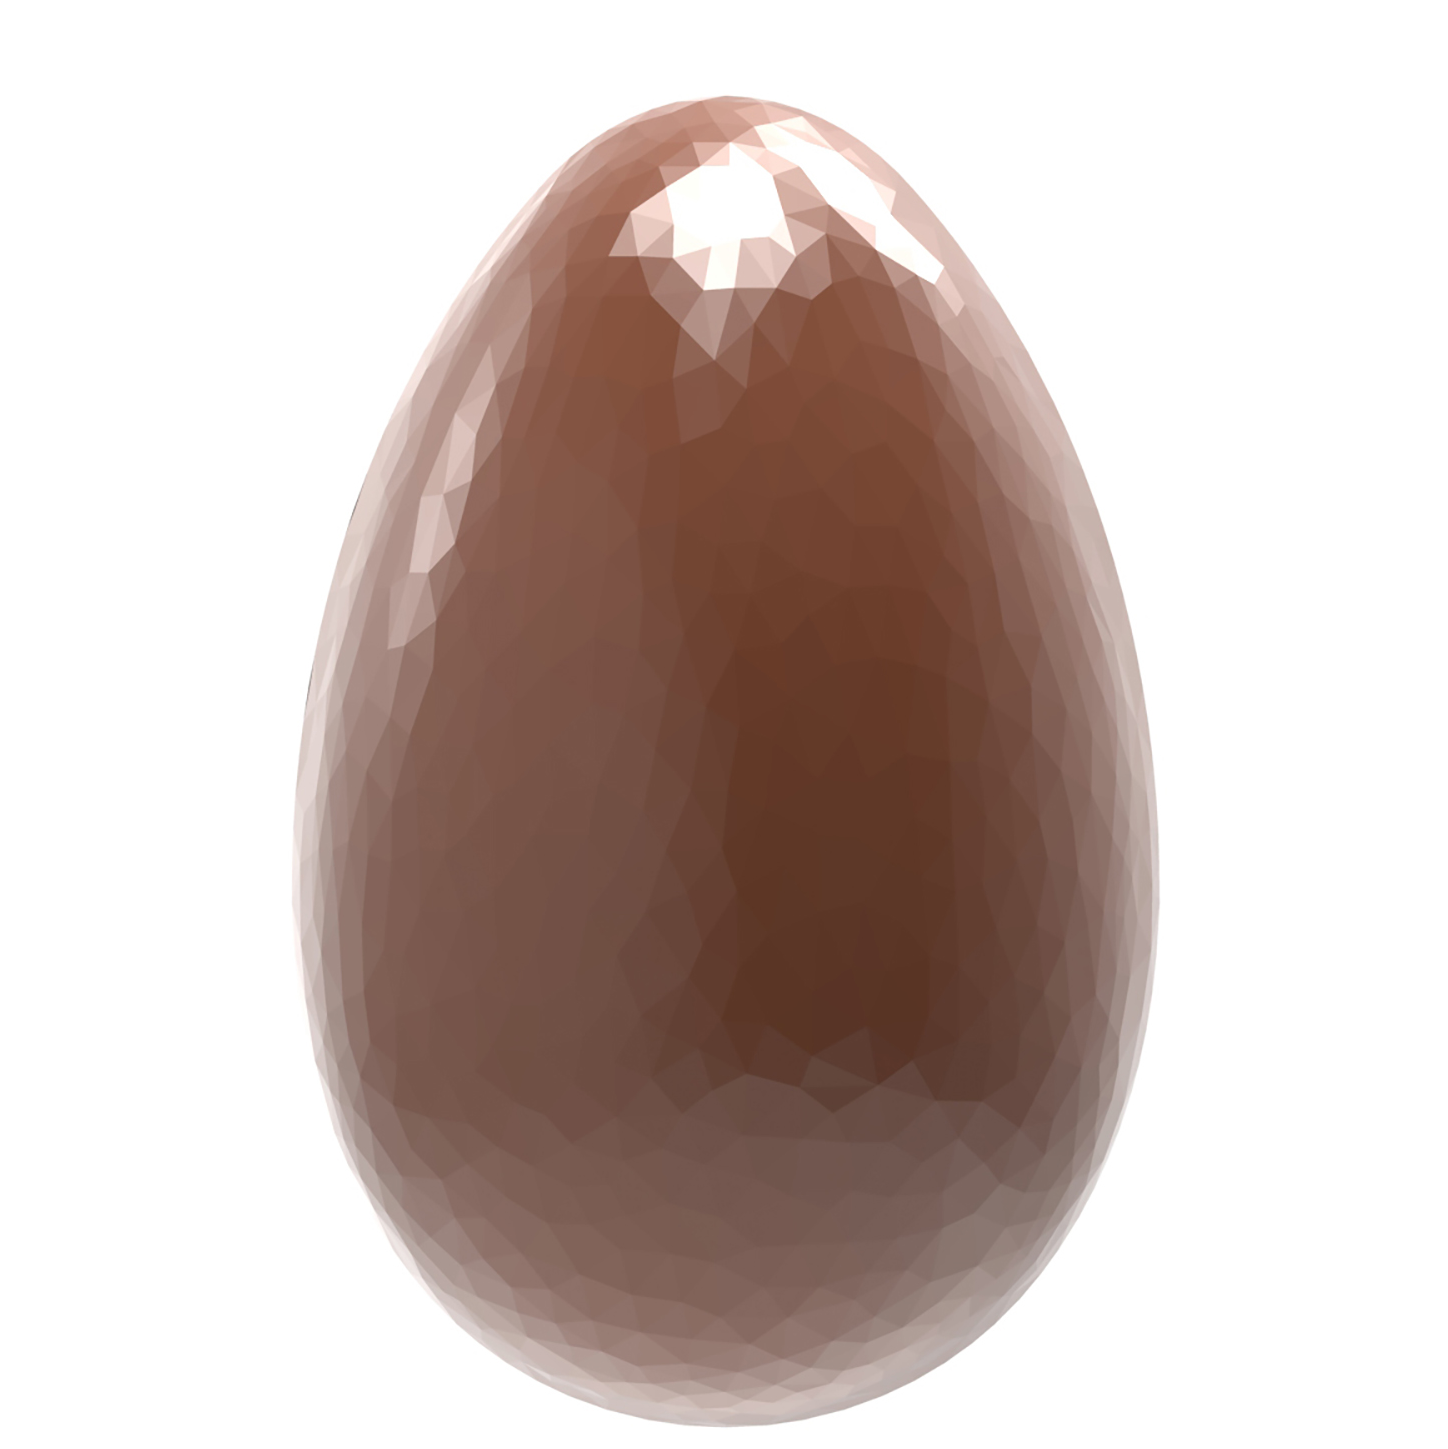 Форма для шоколада «Яйцо кристалл» поликарбонатная CW1910, 6 ячеек, Chocolate World, Бельгия  | Фото — Магазин Andy Chef  1